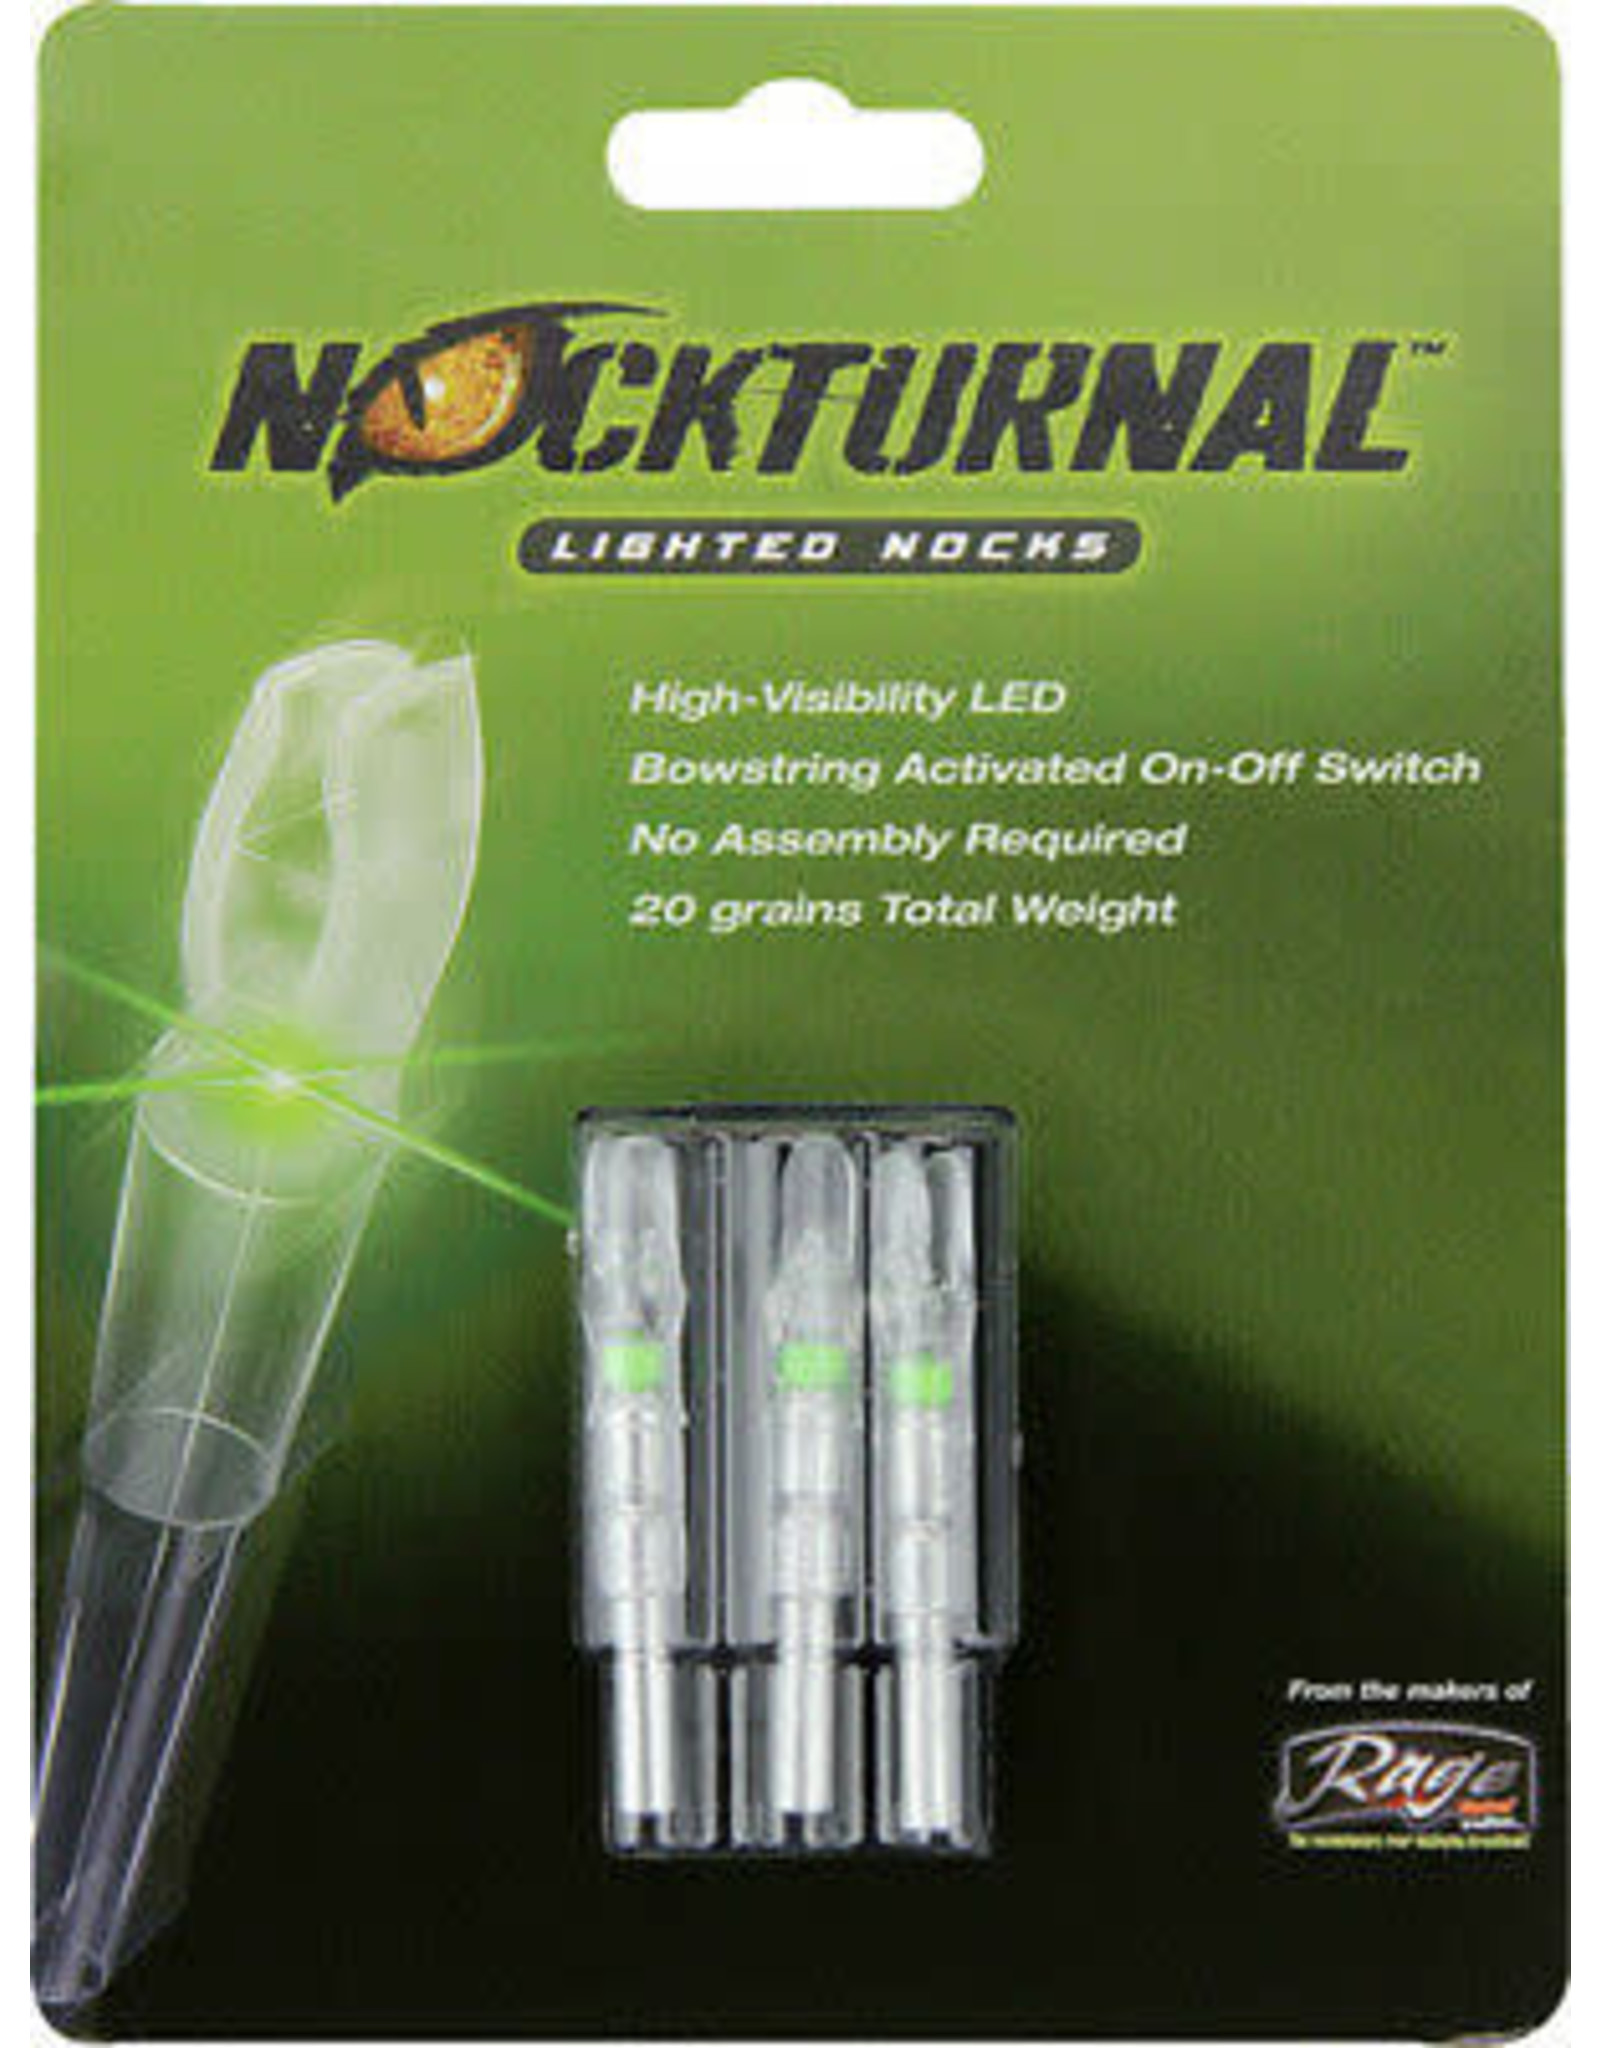 Nockturnal Nockturnal Lighted Nocks